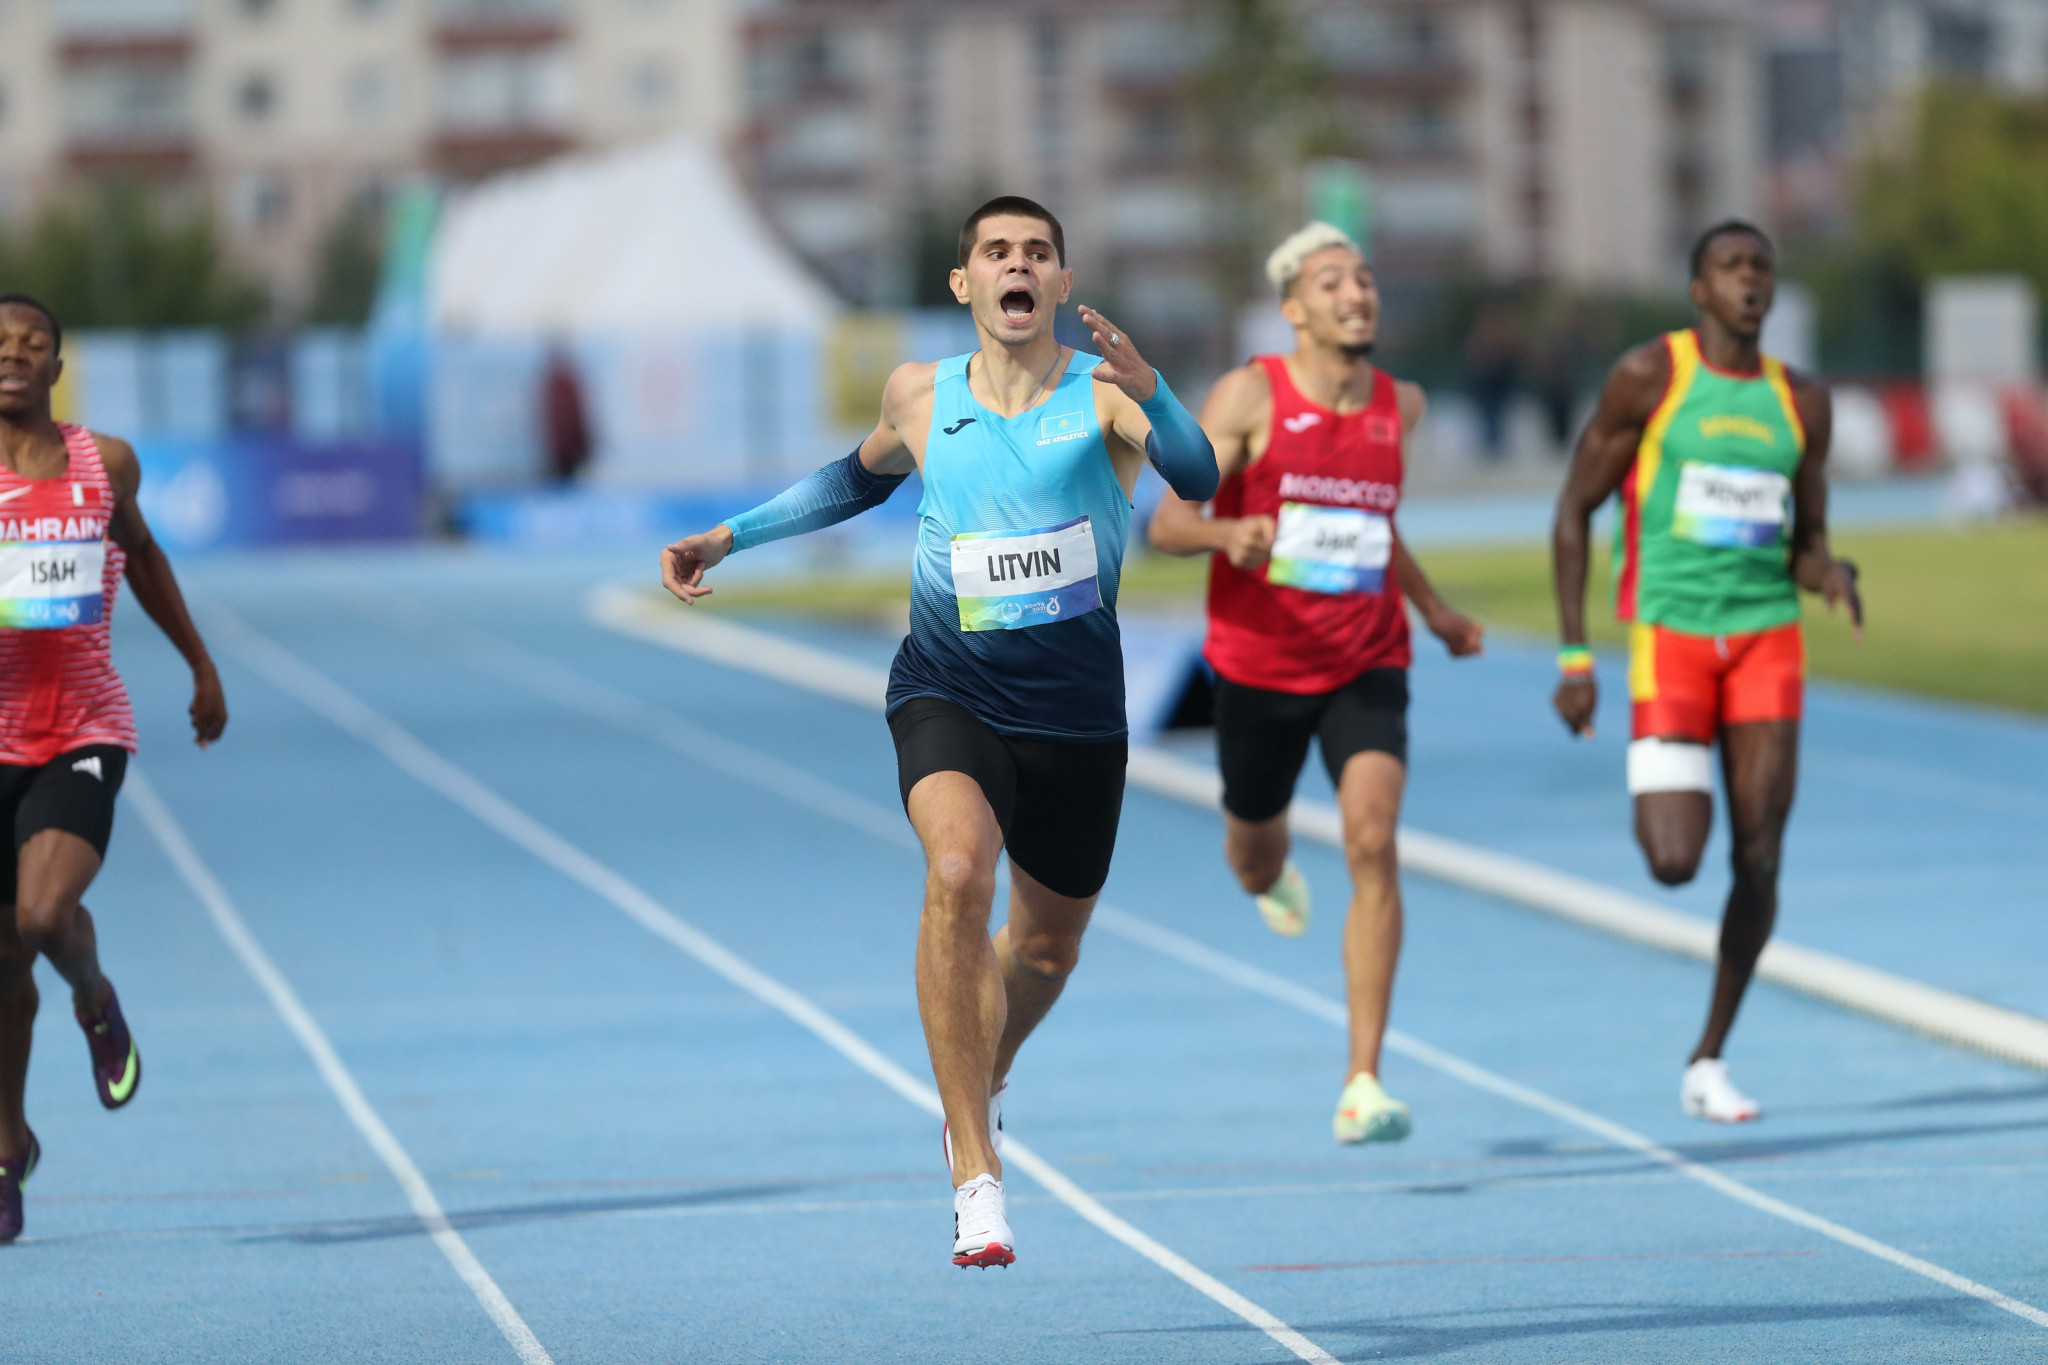 Kazakhstan’s Mikhail Litvin emerged victorious from the men's 400m final ©Konya2021